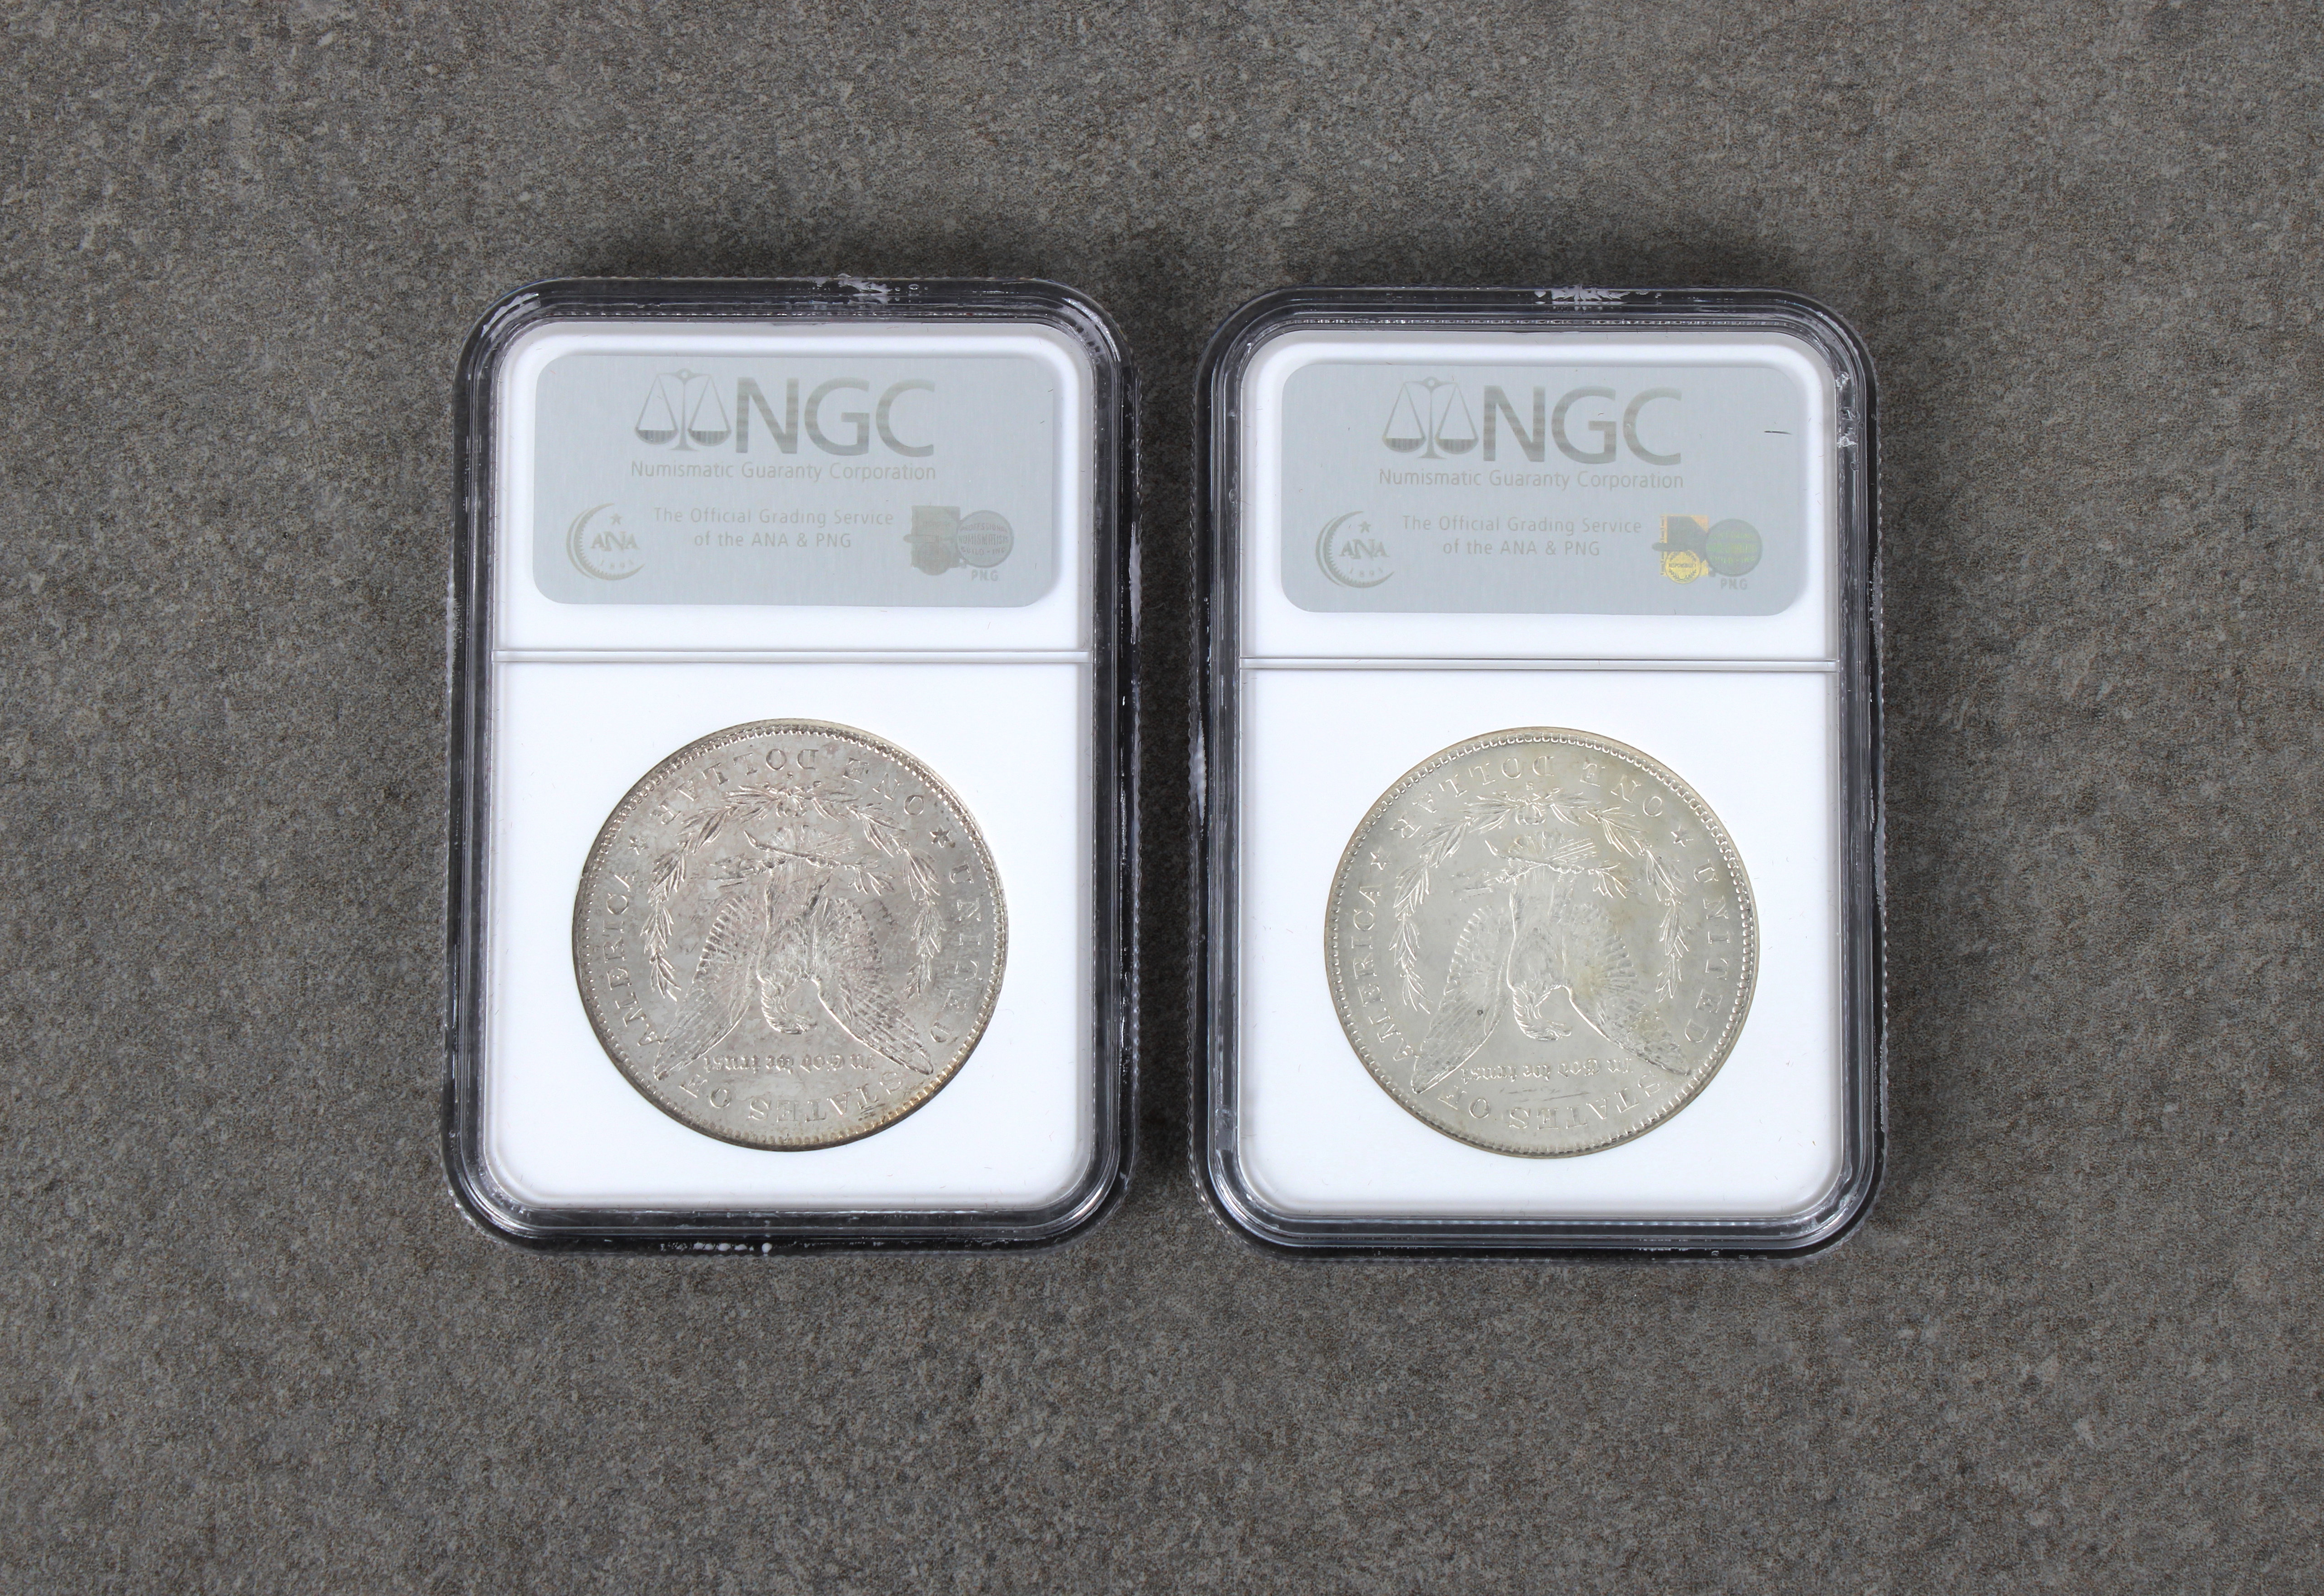 Two x 1878-S Morgan Dollars - NGC graded - Image 2 of 2